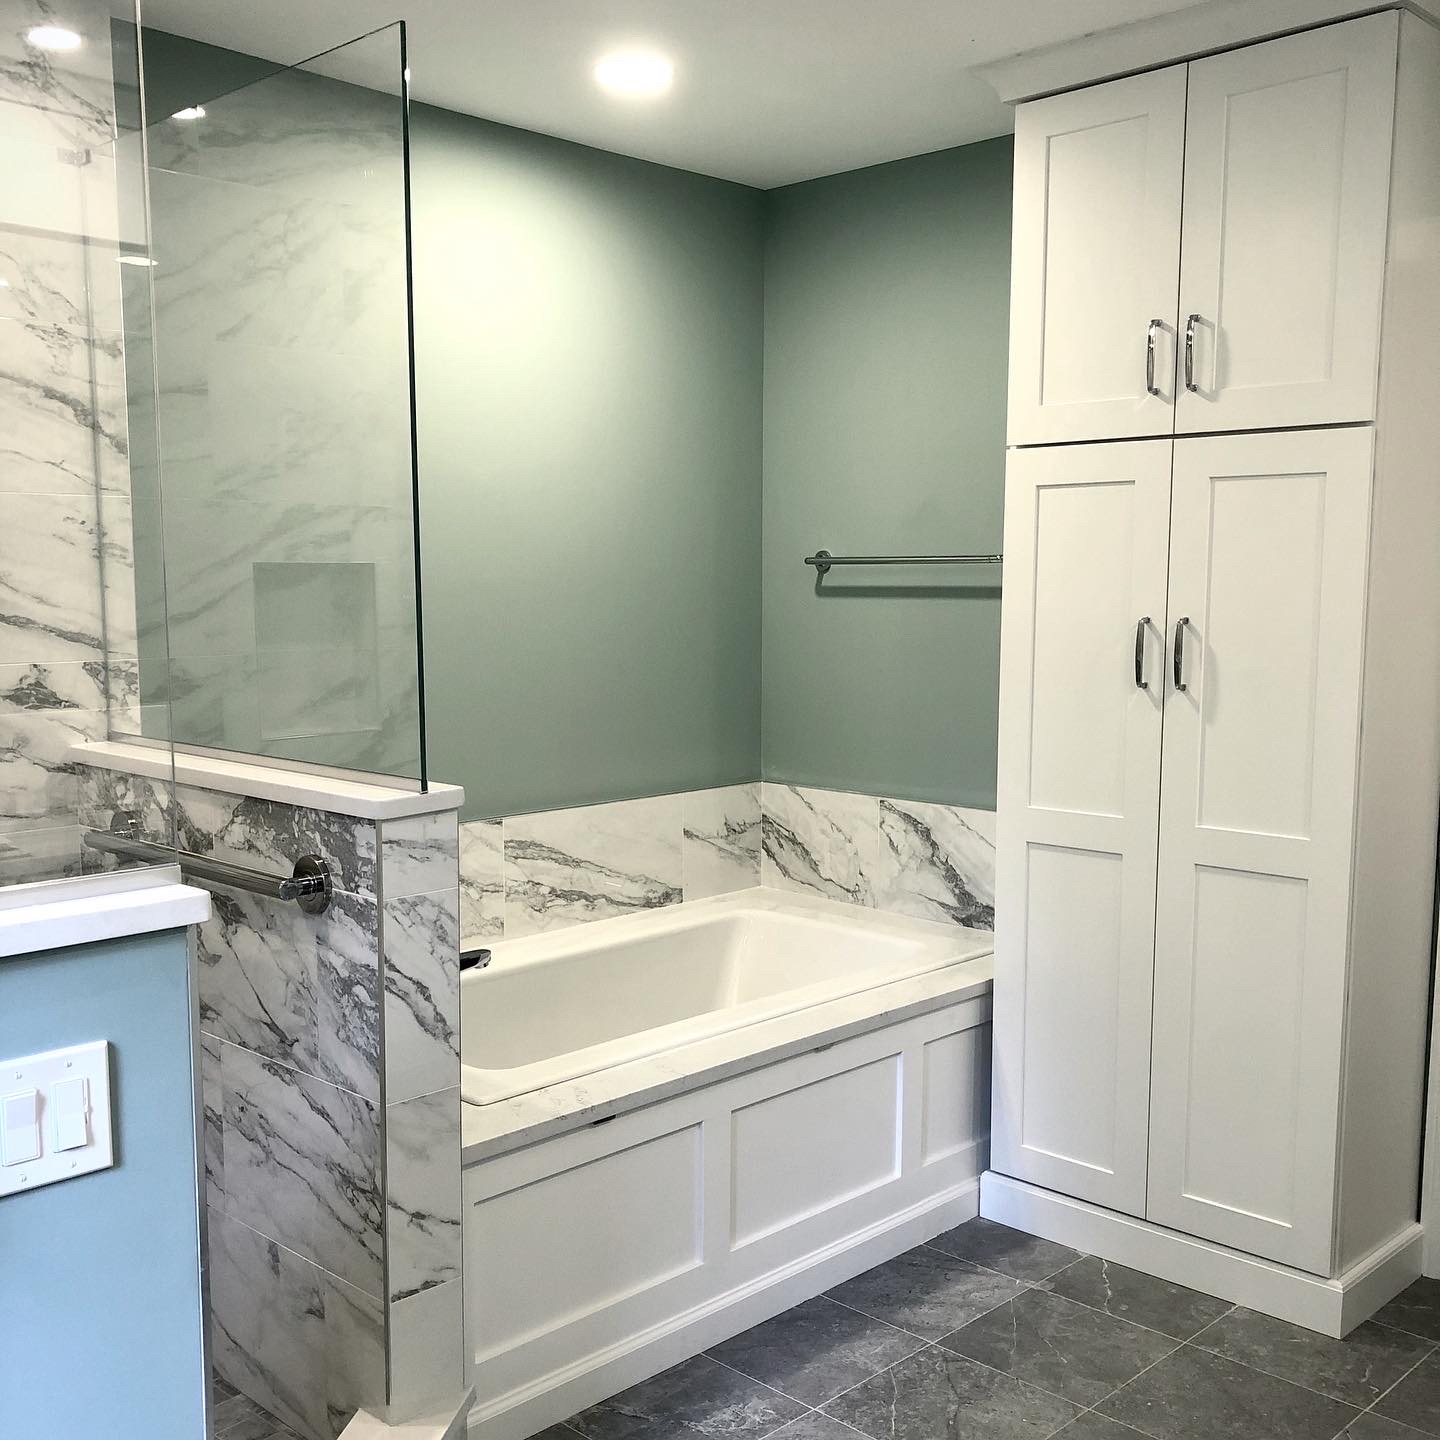 Full Bathroom Large Open Shower Bathtub With Cabinet Storage